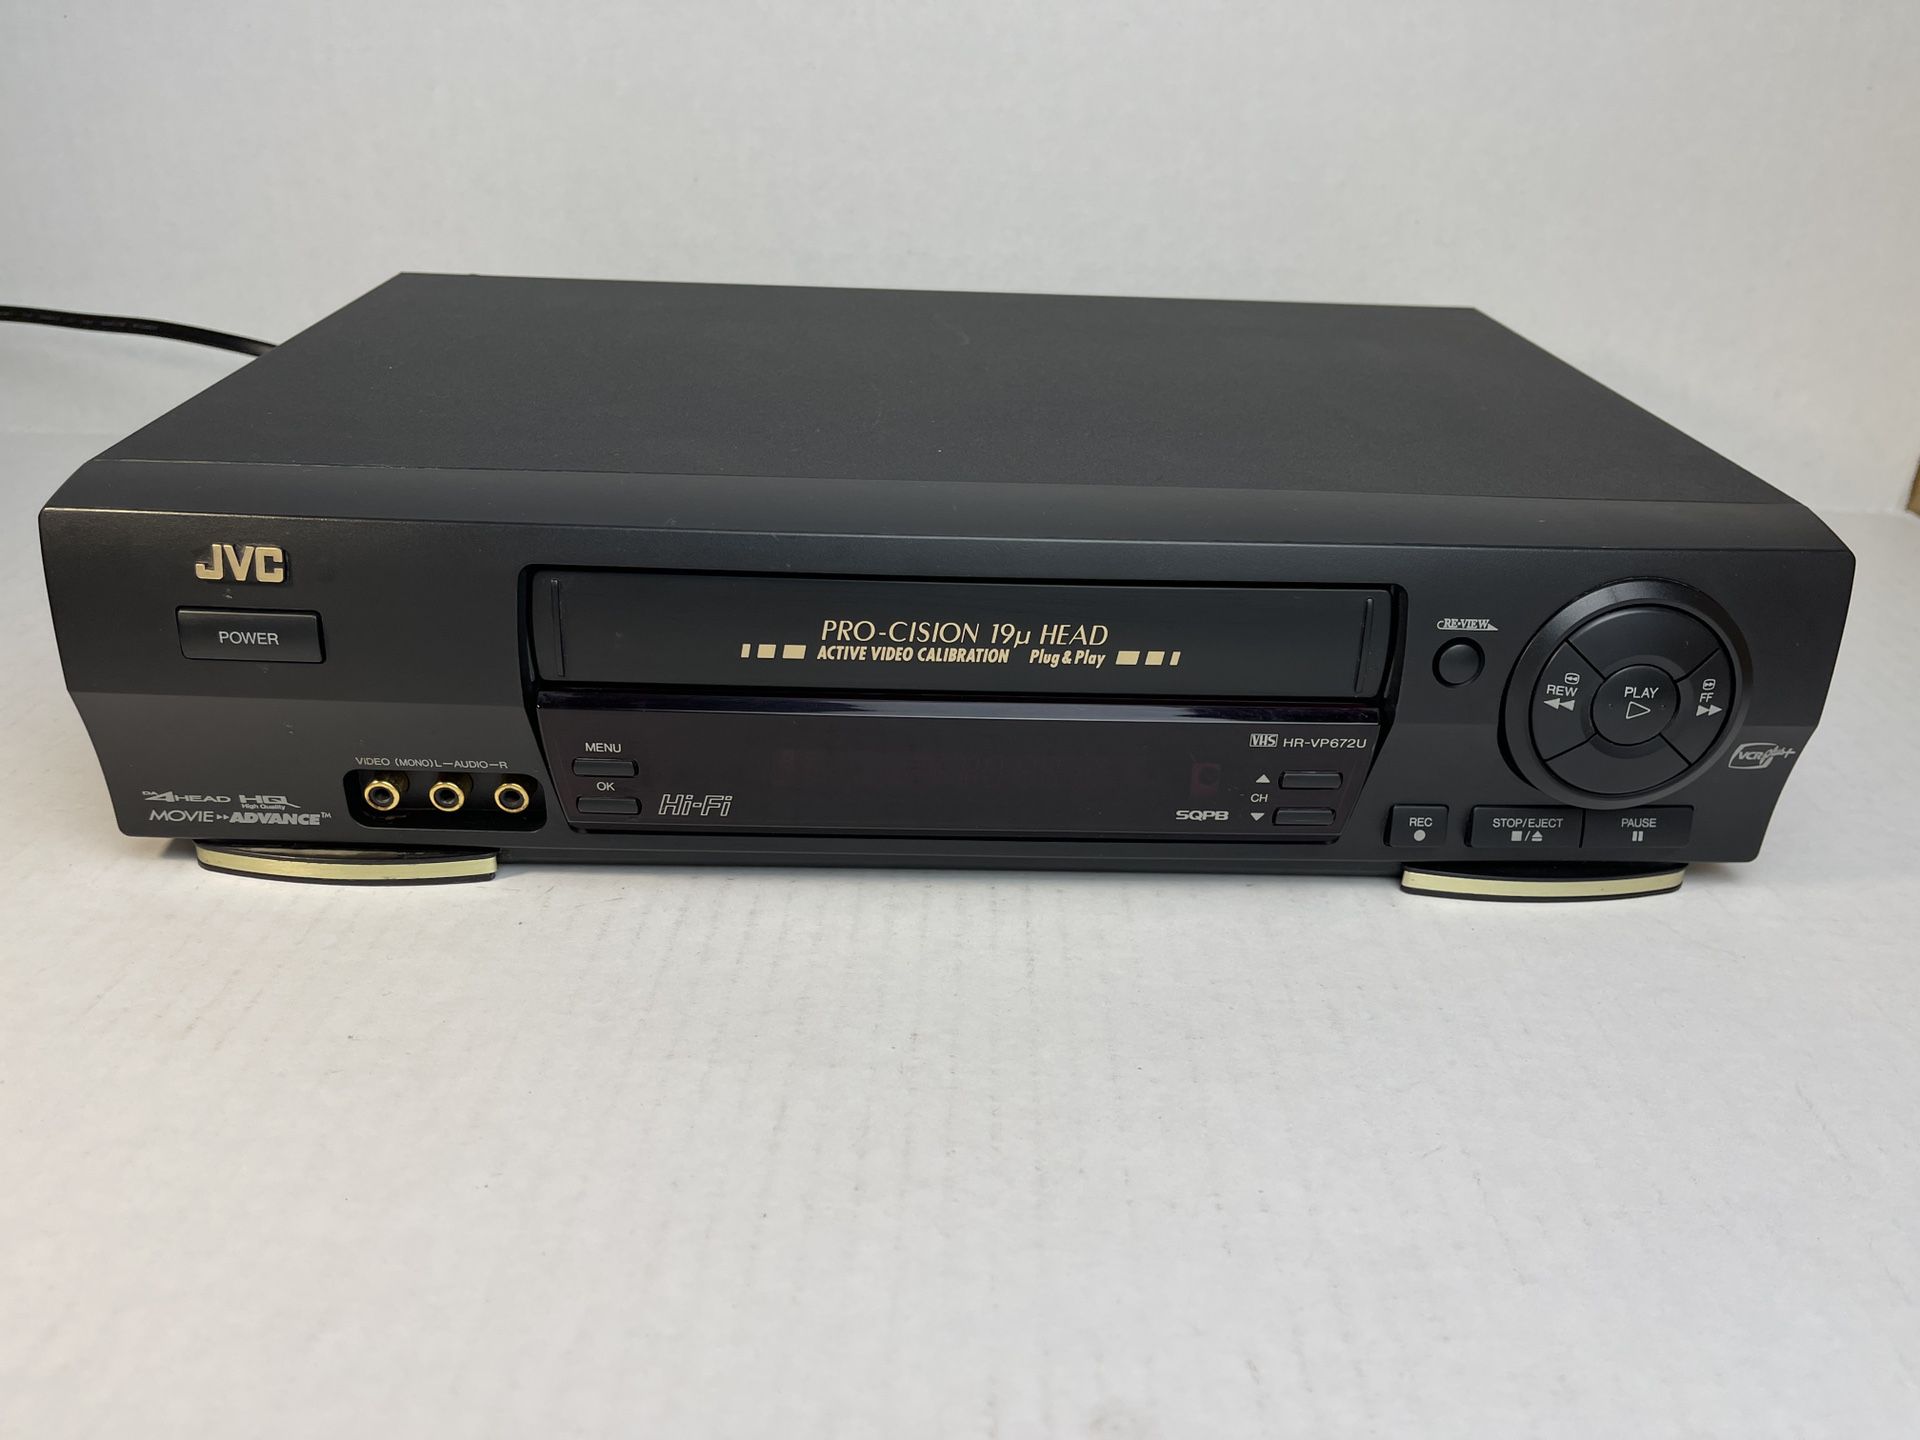 JVC 4-Head VCR VHS Tested Working HR-VP672U No Remote Black Hi-Fi